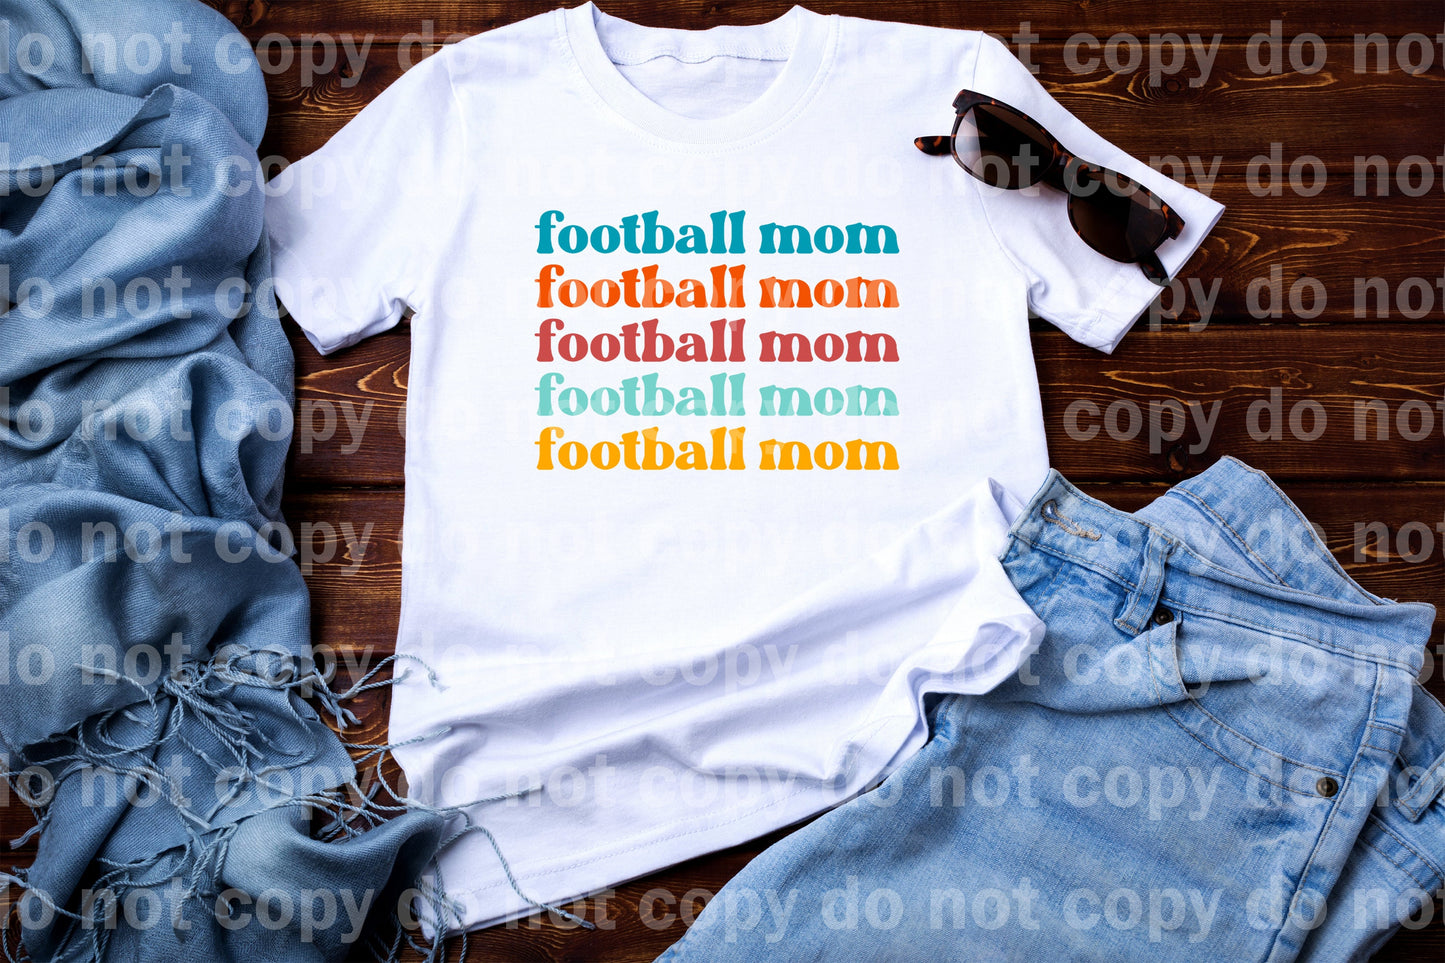 Impresión multicolor de Football Mom Dream o impresión por sublimación